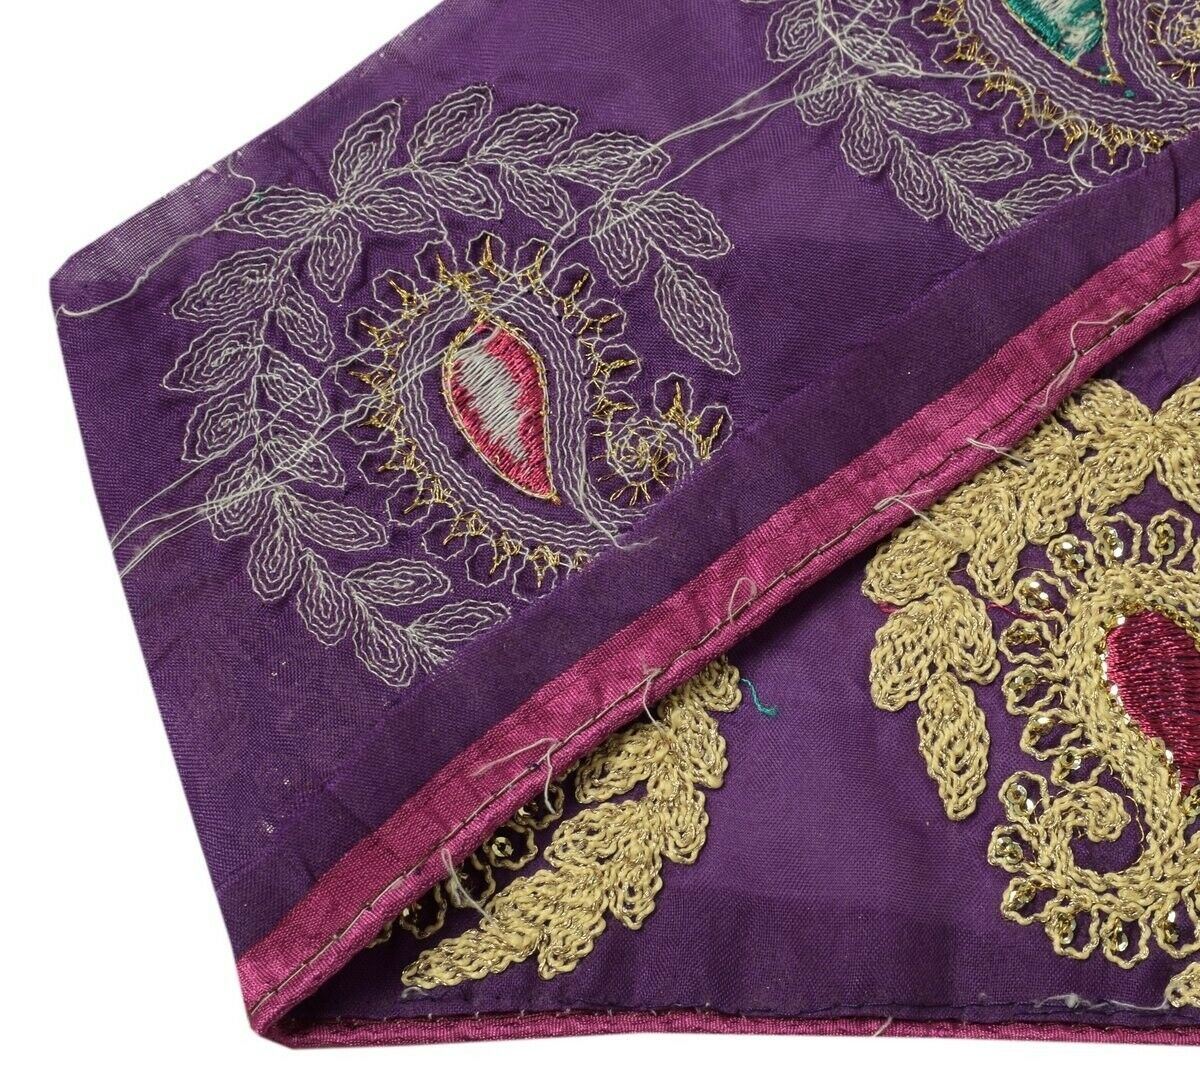 Vintage Sari Border Indian Craft Trim Embroidered Rope Stitch Purple Ribbon Lace